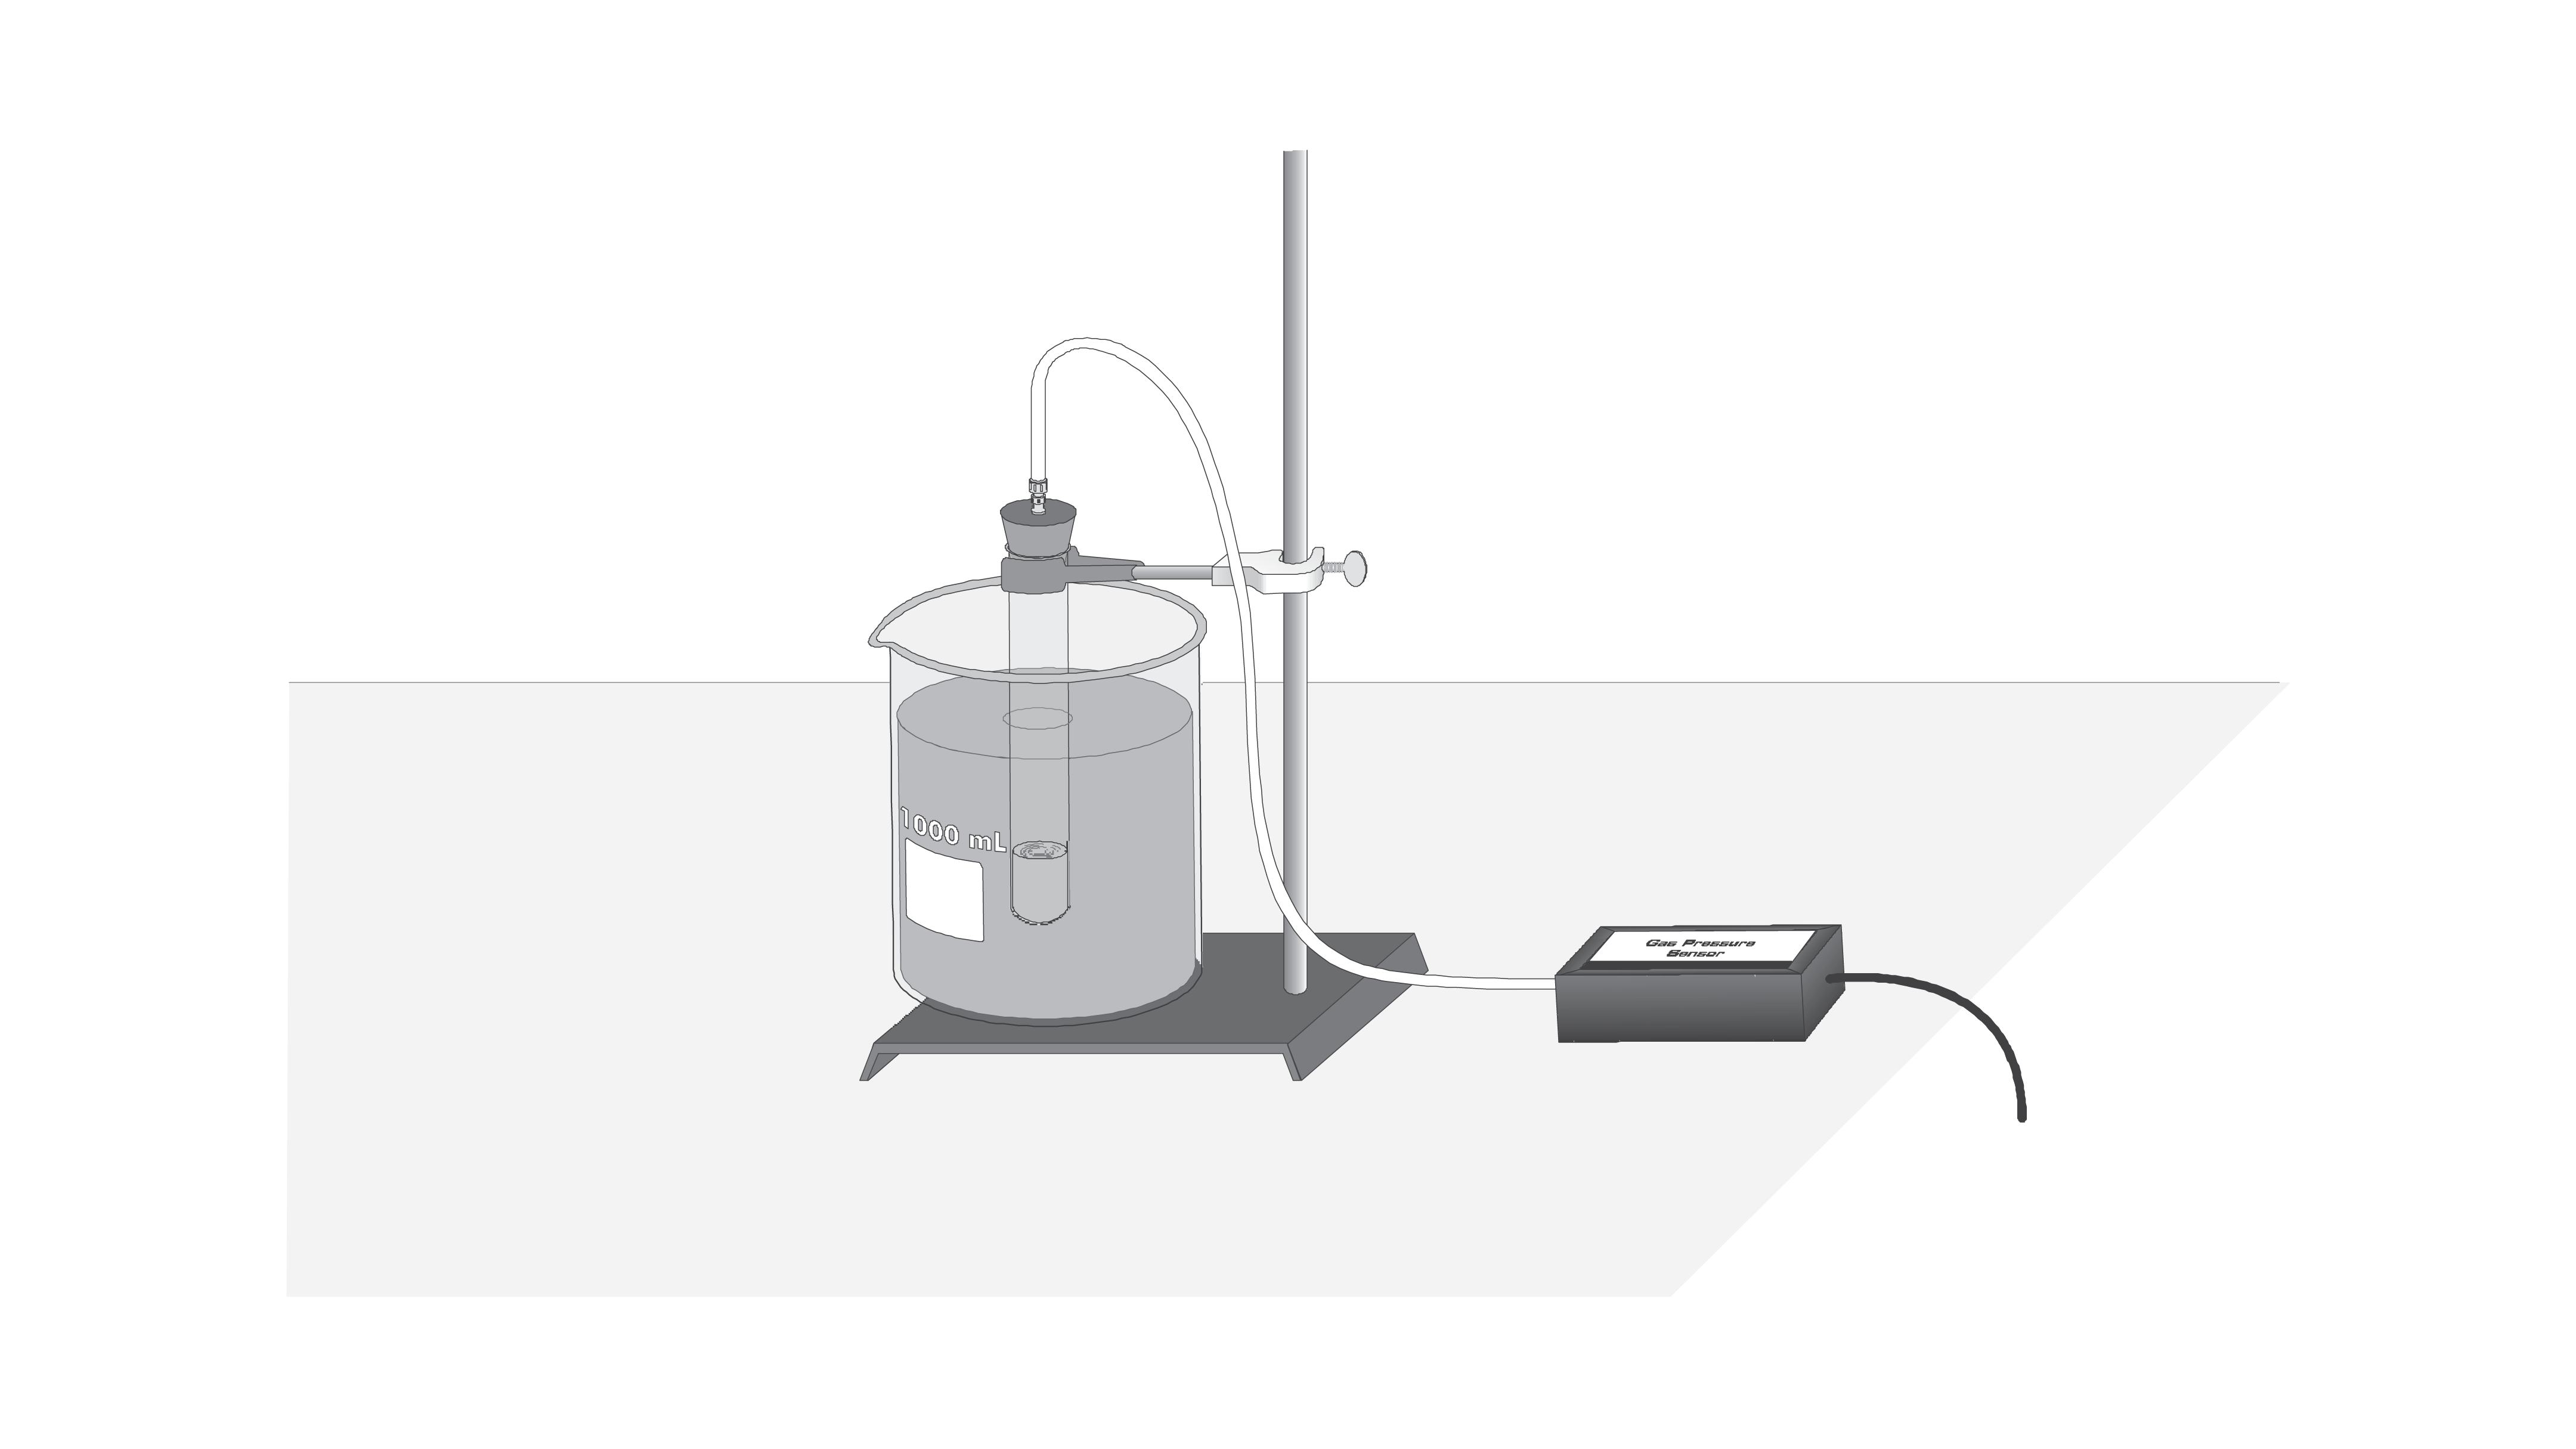 Fermentation of glucose using yeast, Experiment